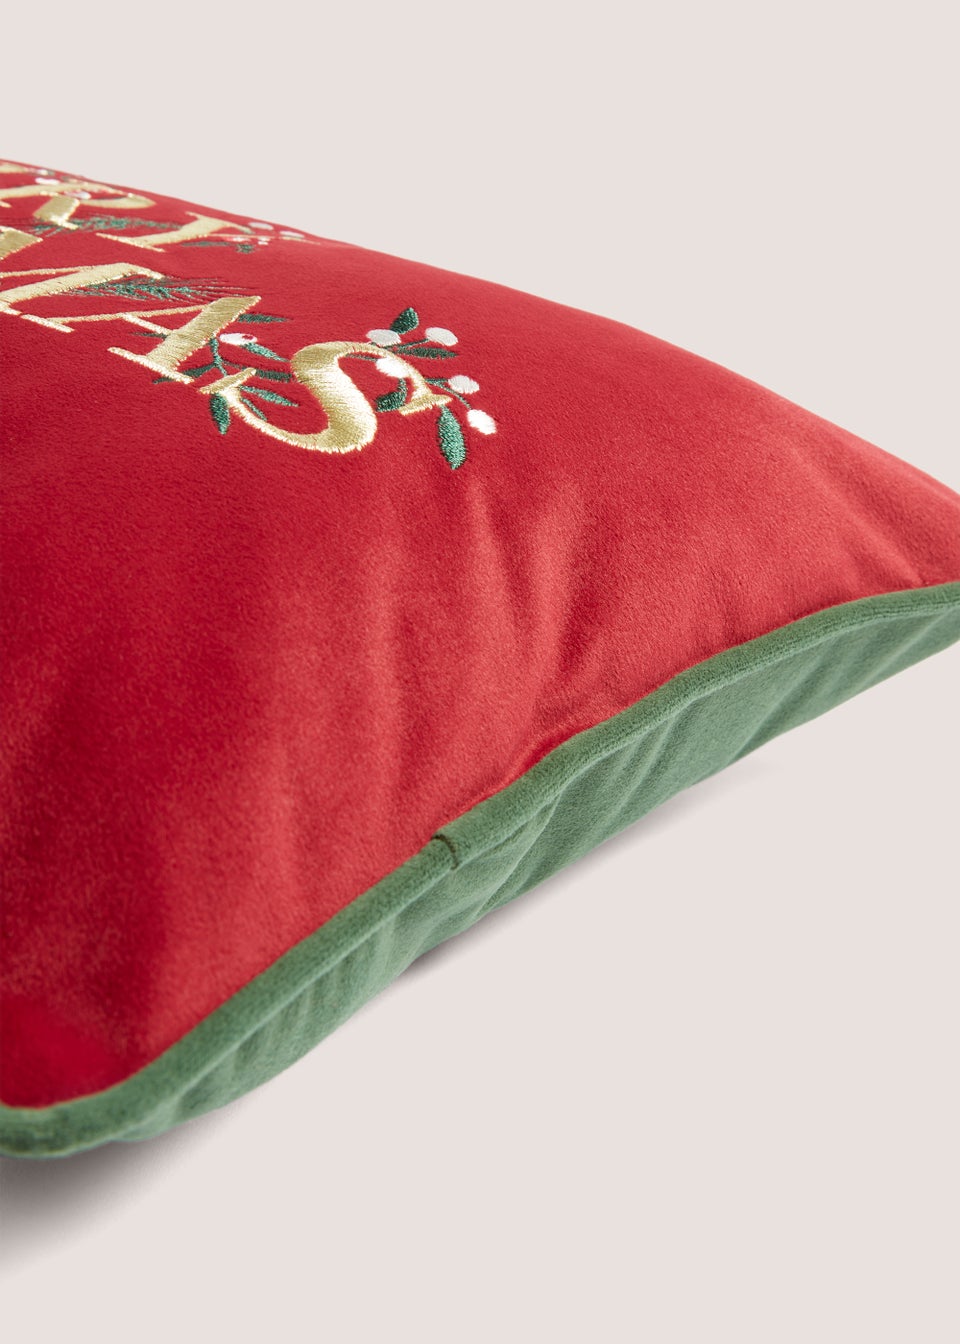 Merry Christmas Cushion (30cm x 50cm)